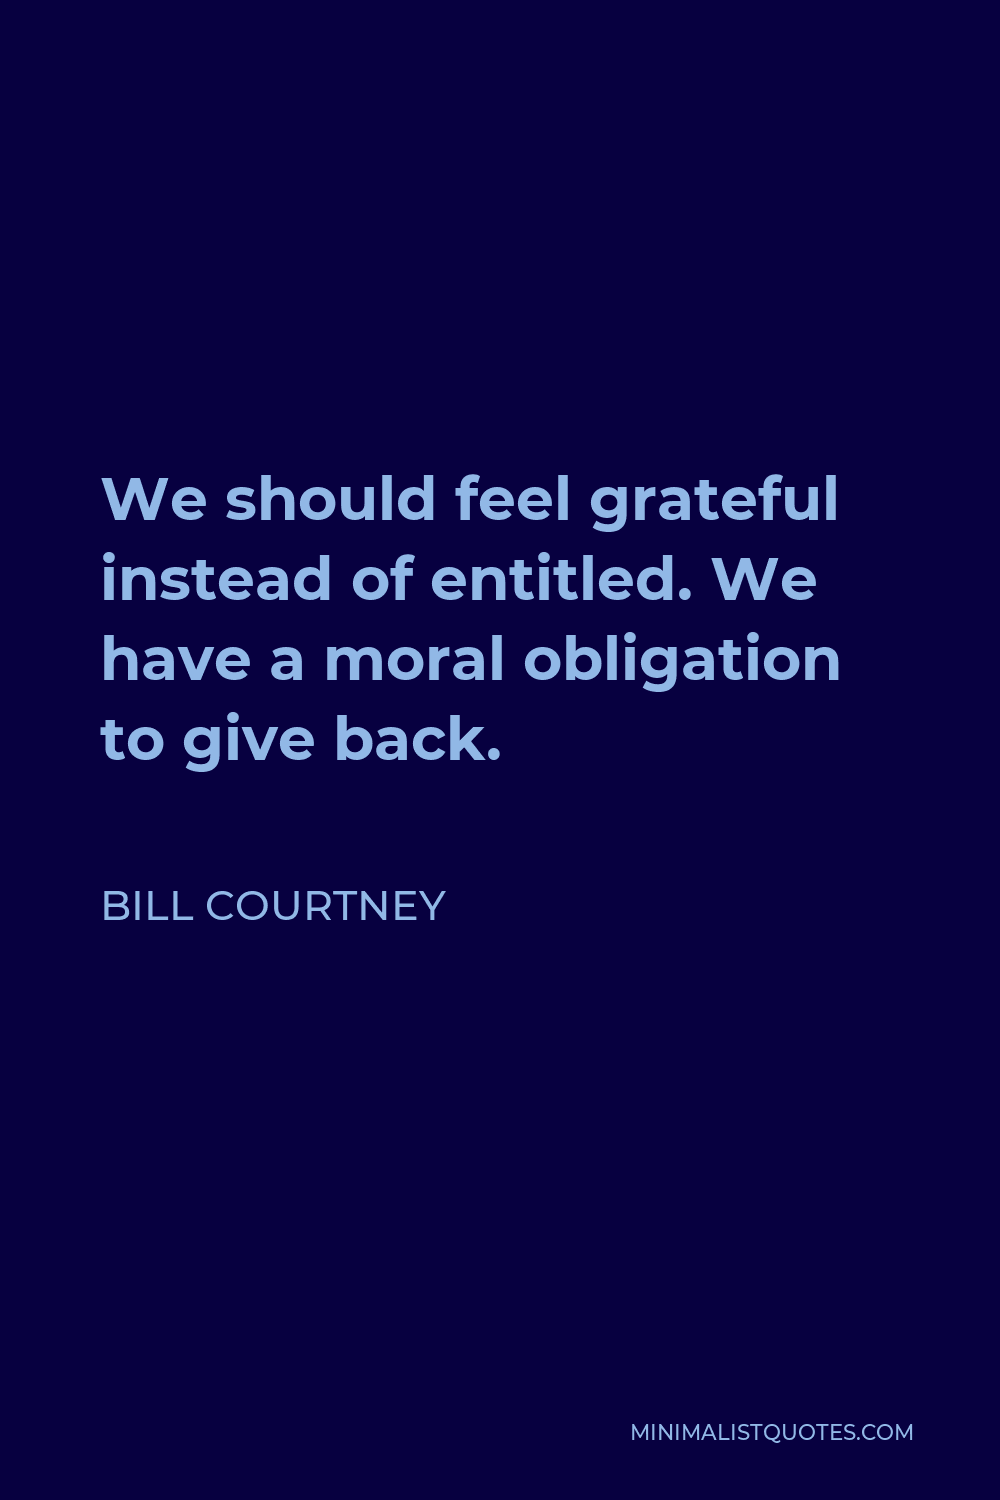 Bill Courtney Quote - We should feel grateful instead of entitled. We have a moral obligation to give back.